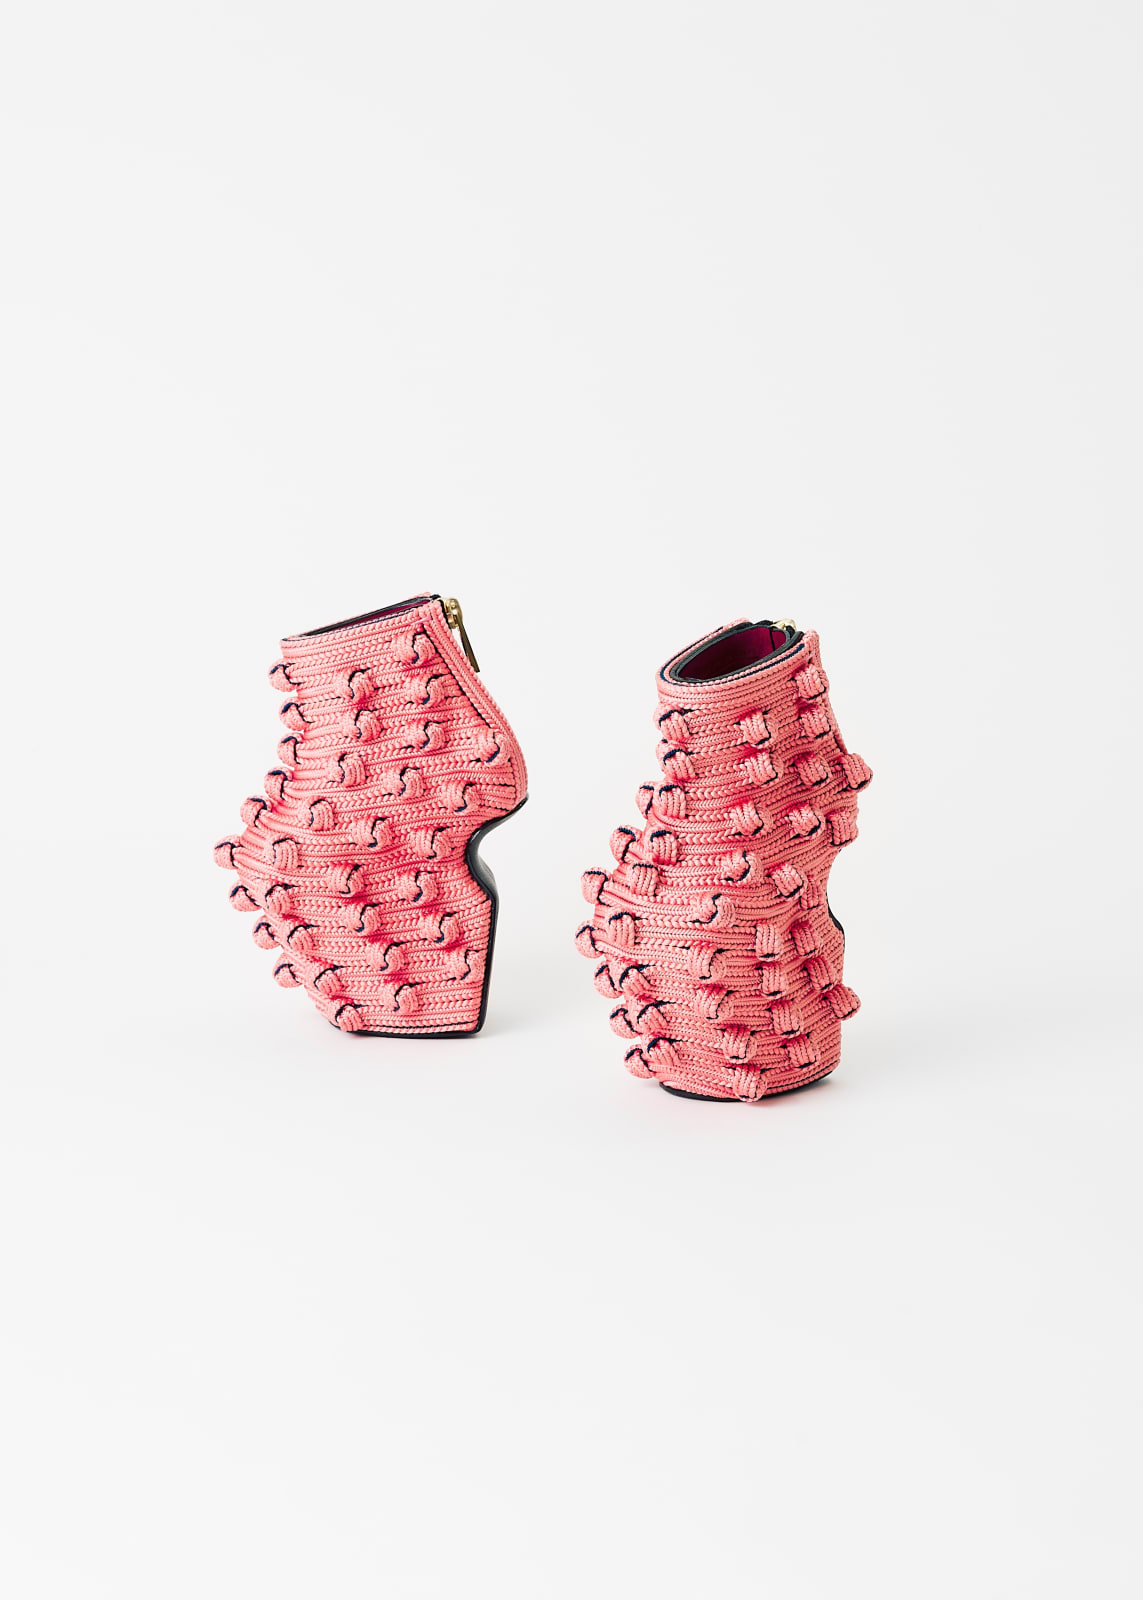 Noritaka Tatehana, Baby Heel-less Shoes, 2021